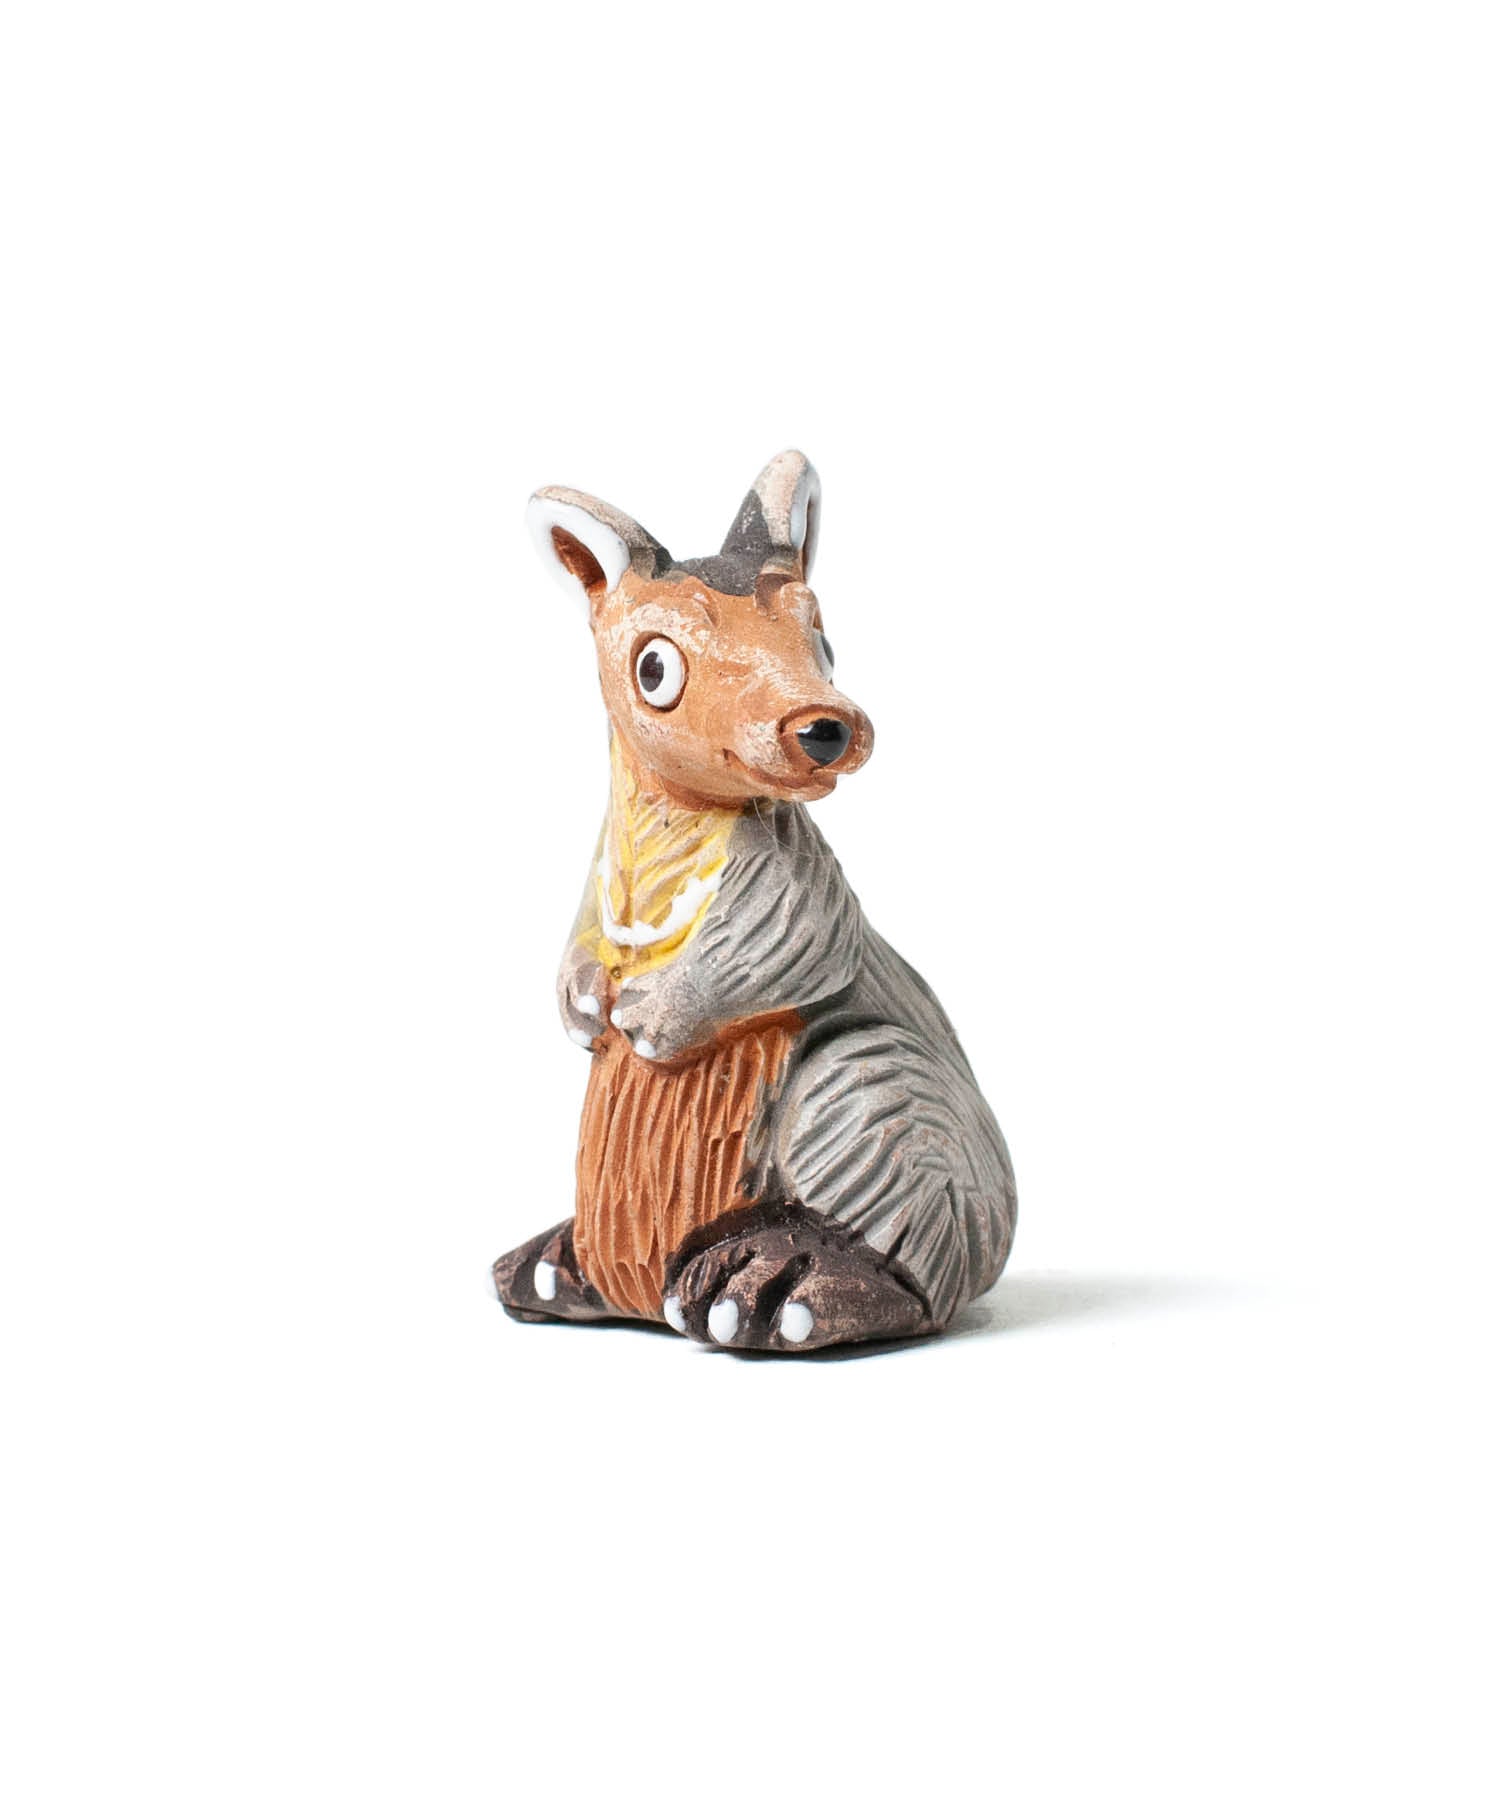 Vintage Object : LEPS Peruvian kangaroo | LIKE THIS SHOP